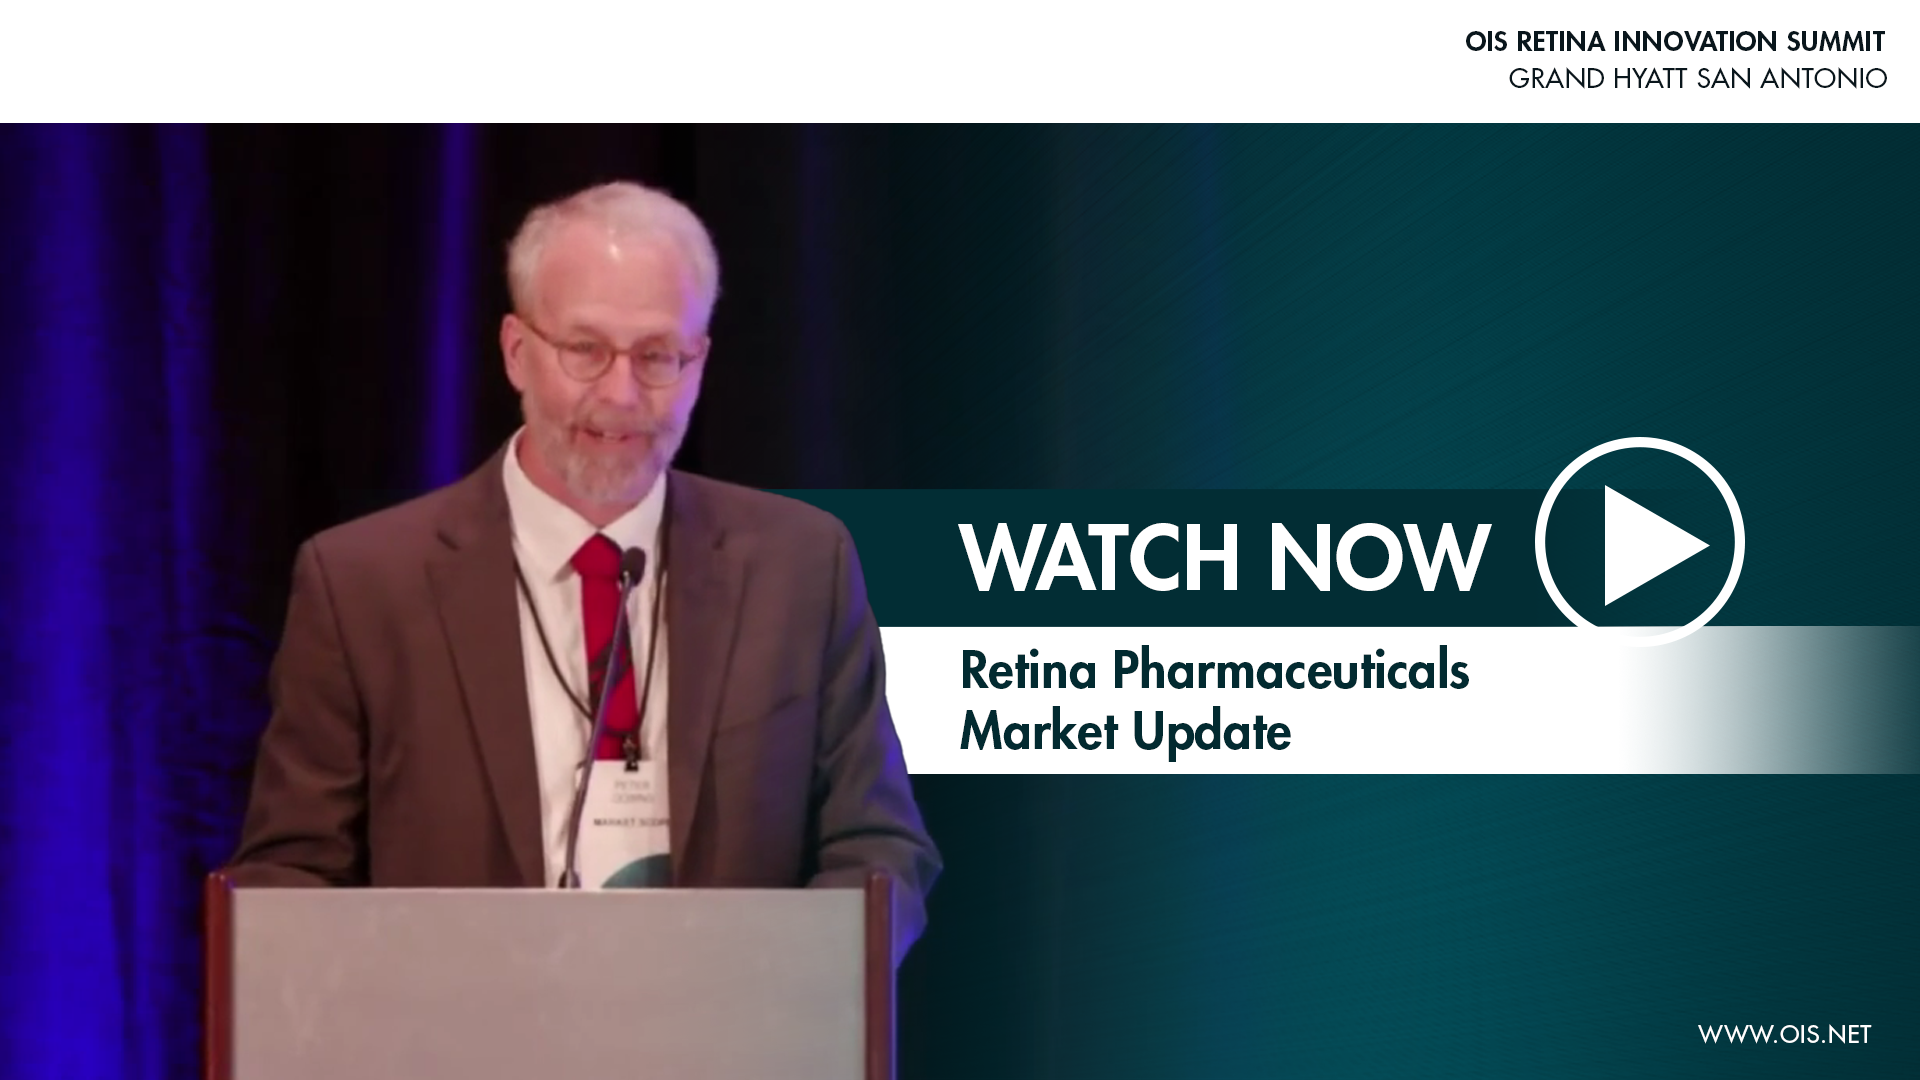 Watch Now - Retina Pharmaceuticals Market Update